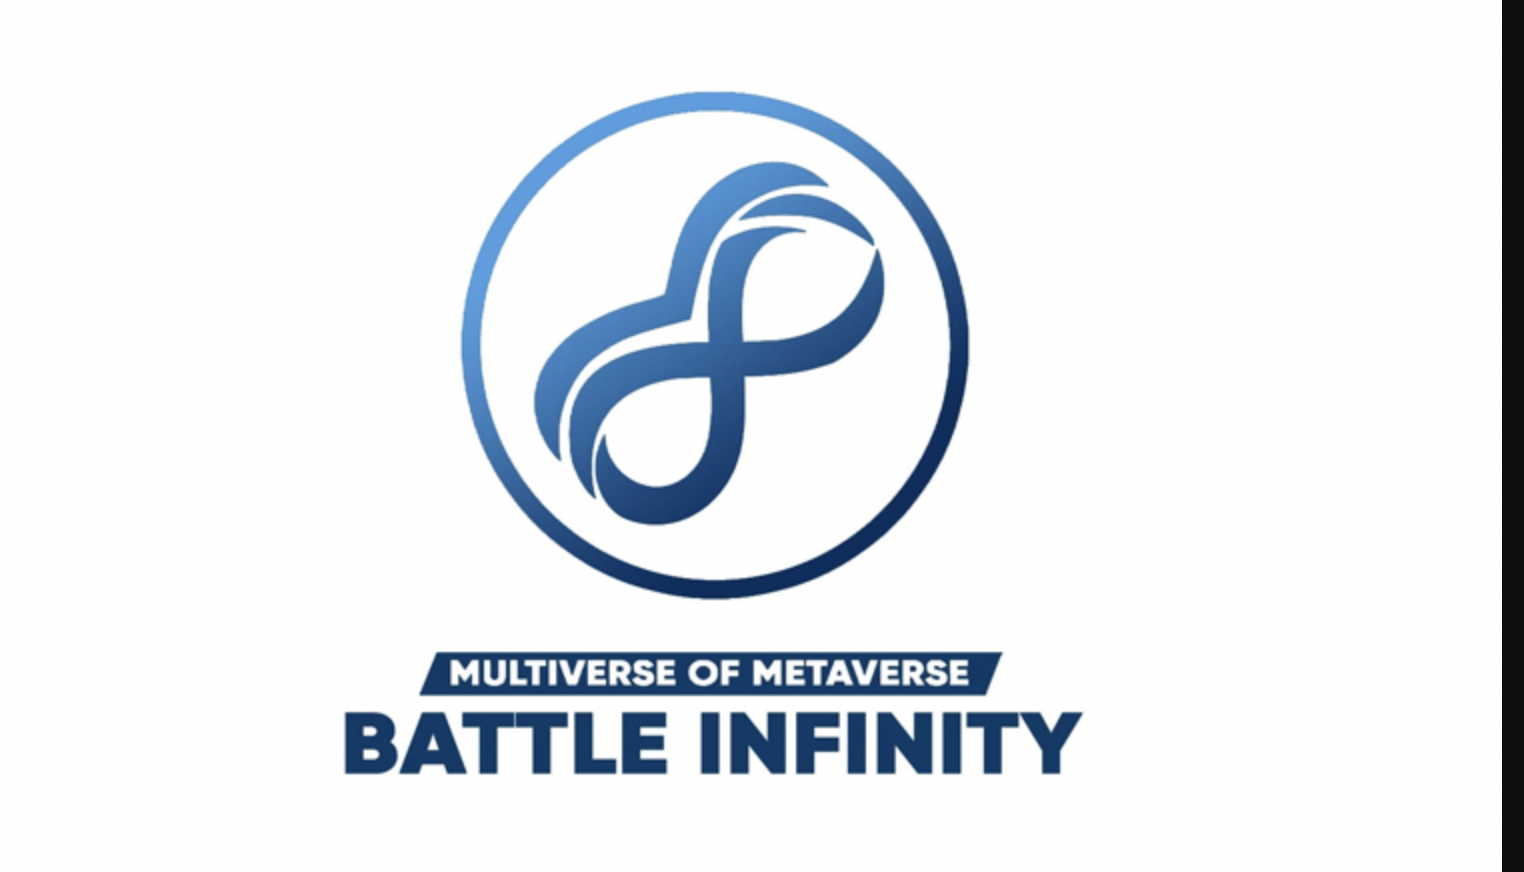 battle infinity logo the multiverse of metaverse